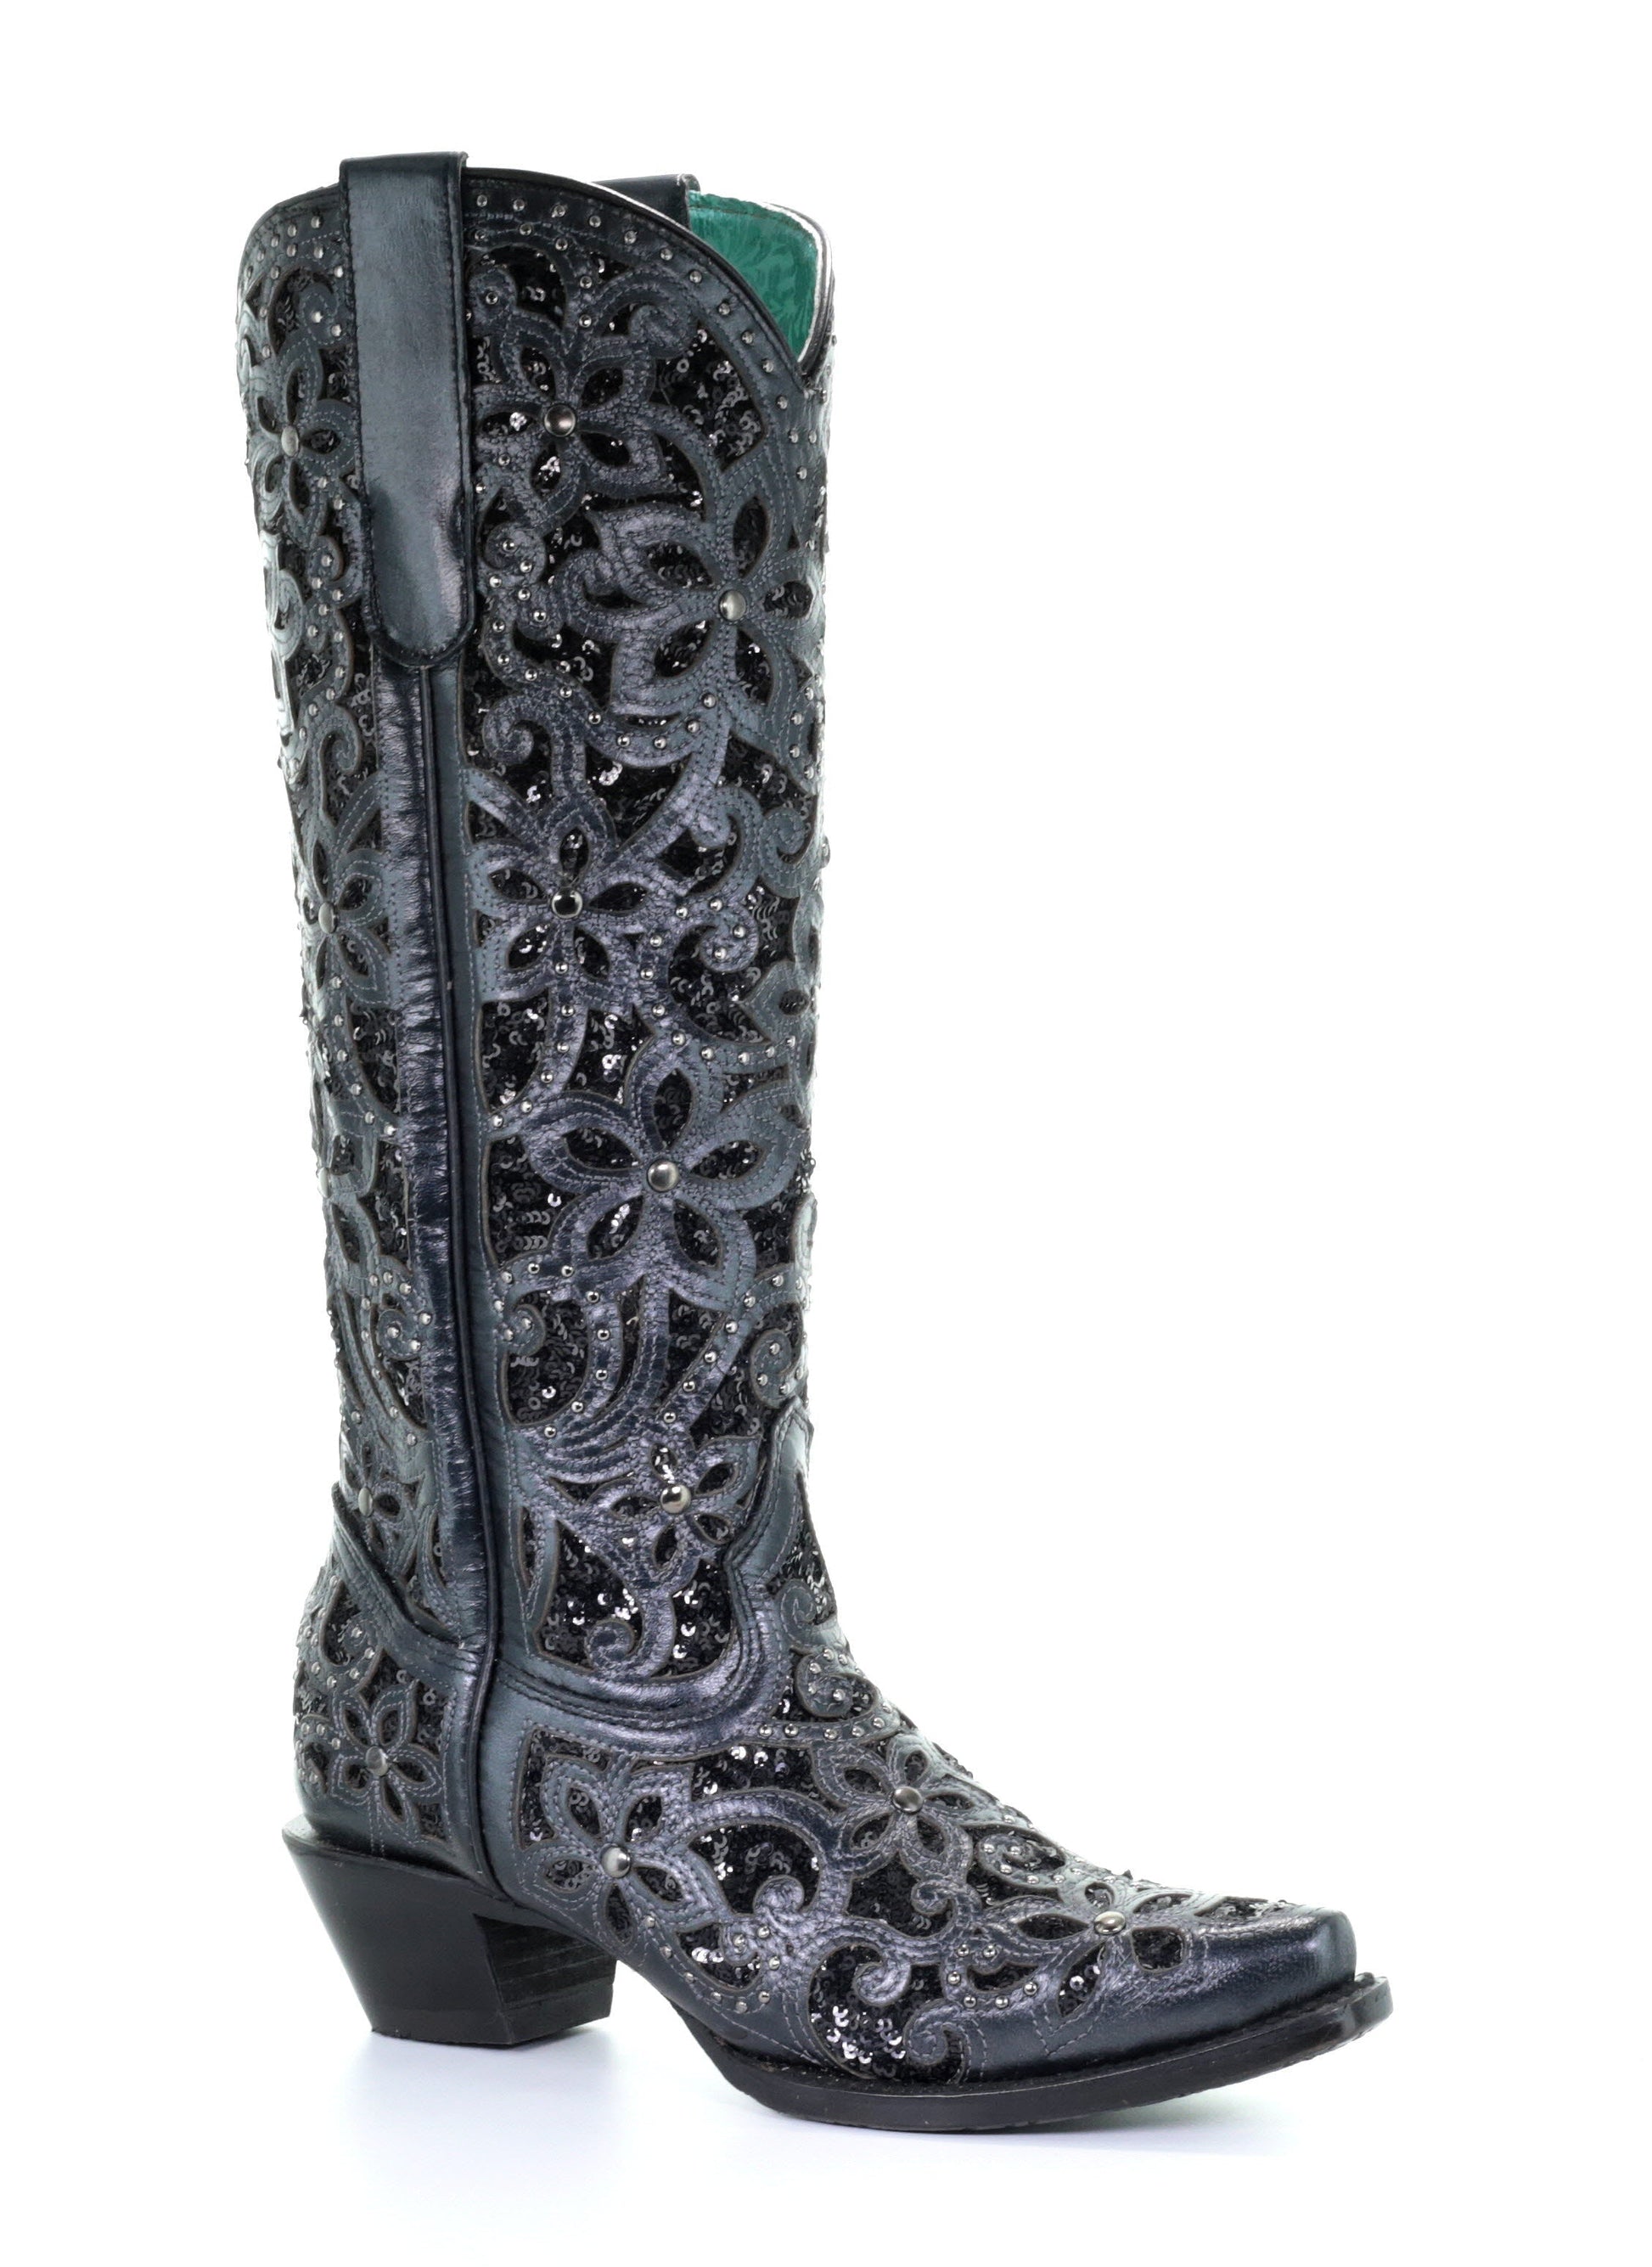 A3589 - Corral botas altas western de piel vaquera NEGRO para mujer – Kuet.us - Cuadra Boots Western Cowboy, Casual Fashion and Dress Boots